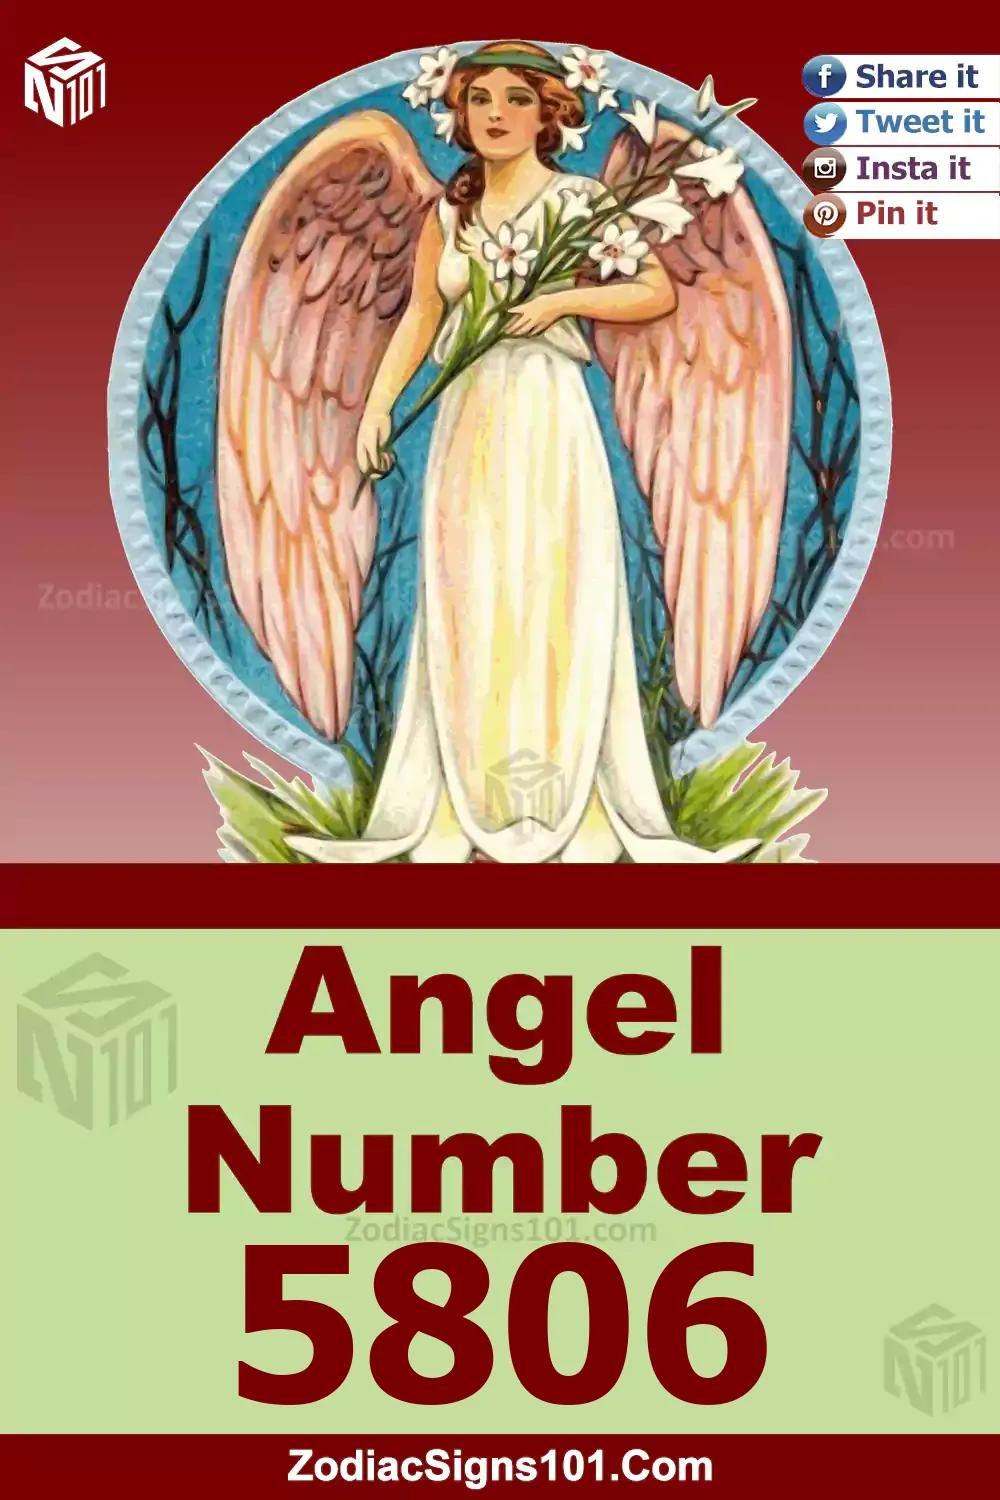 5806-Angel-Number-Meaning.jpg